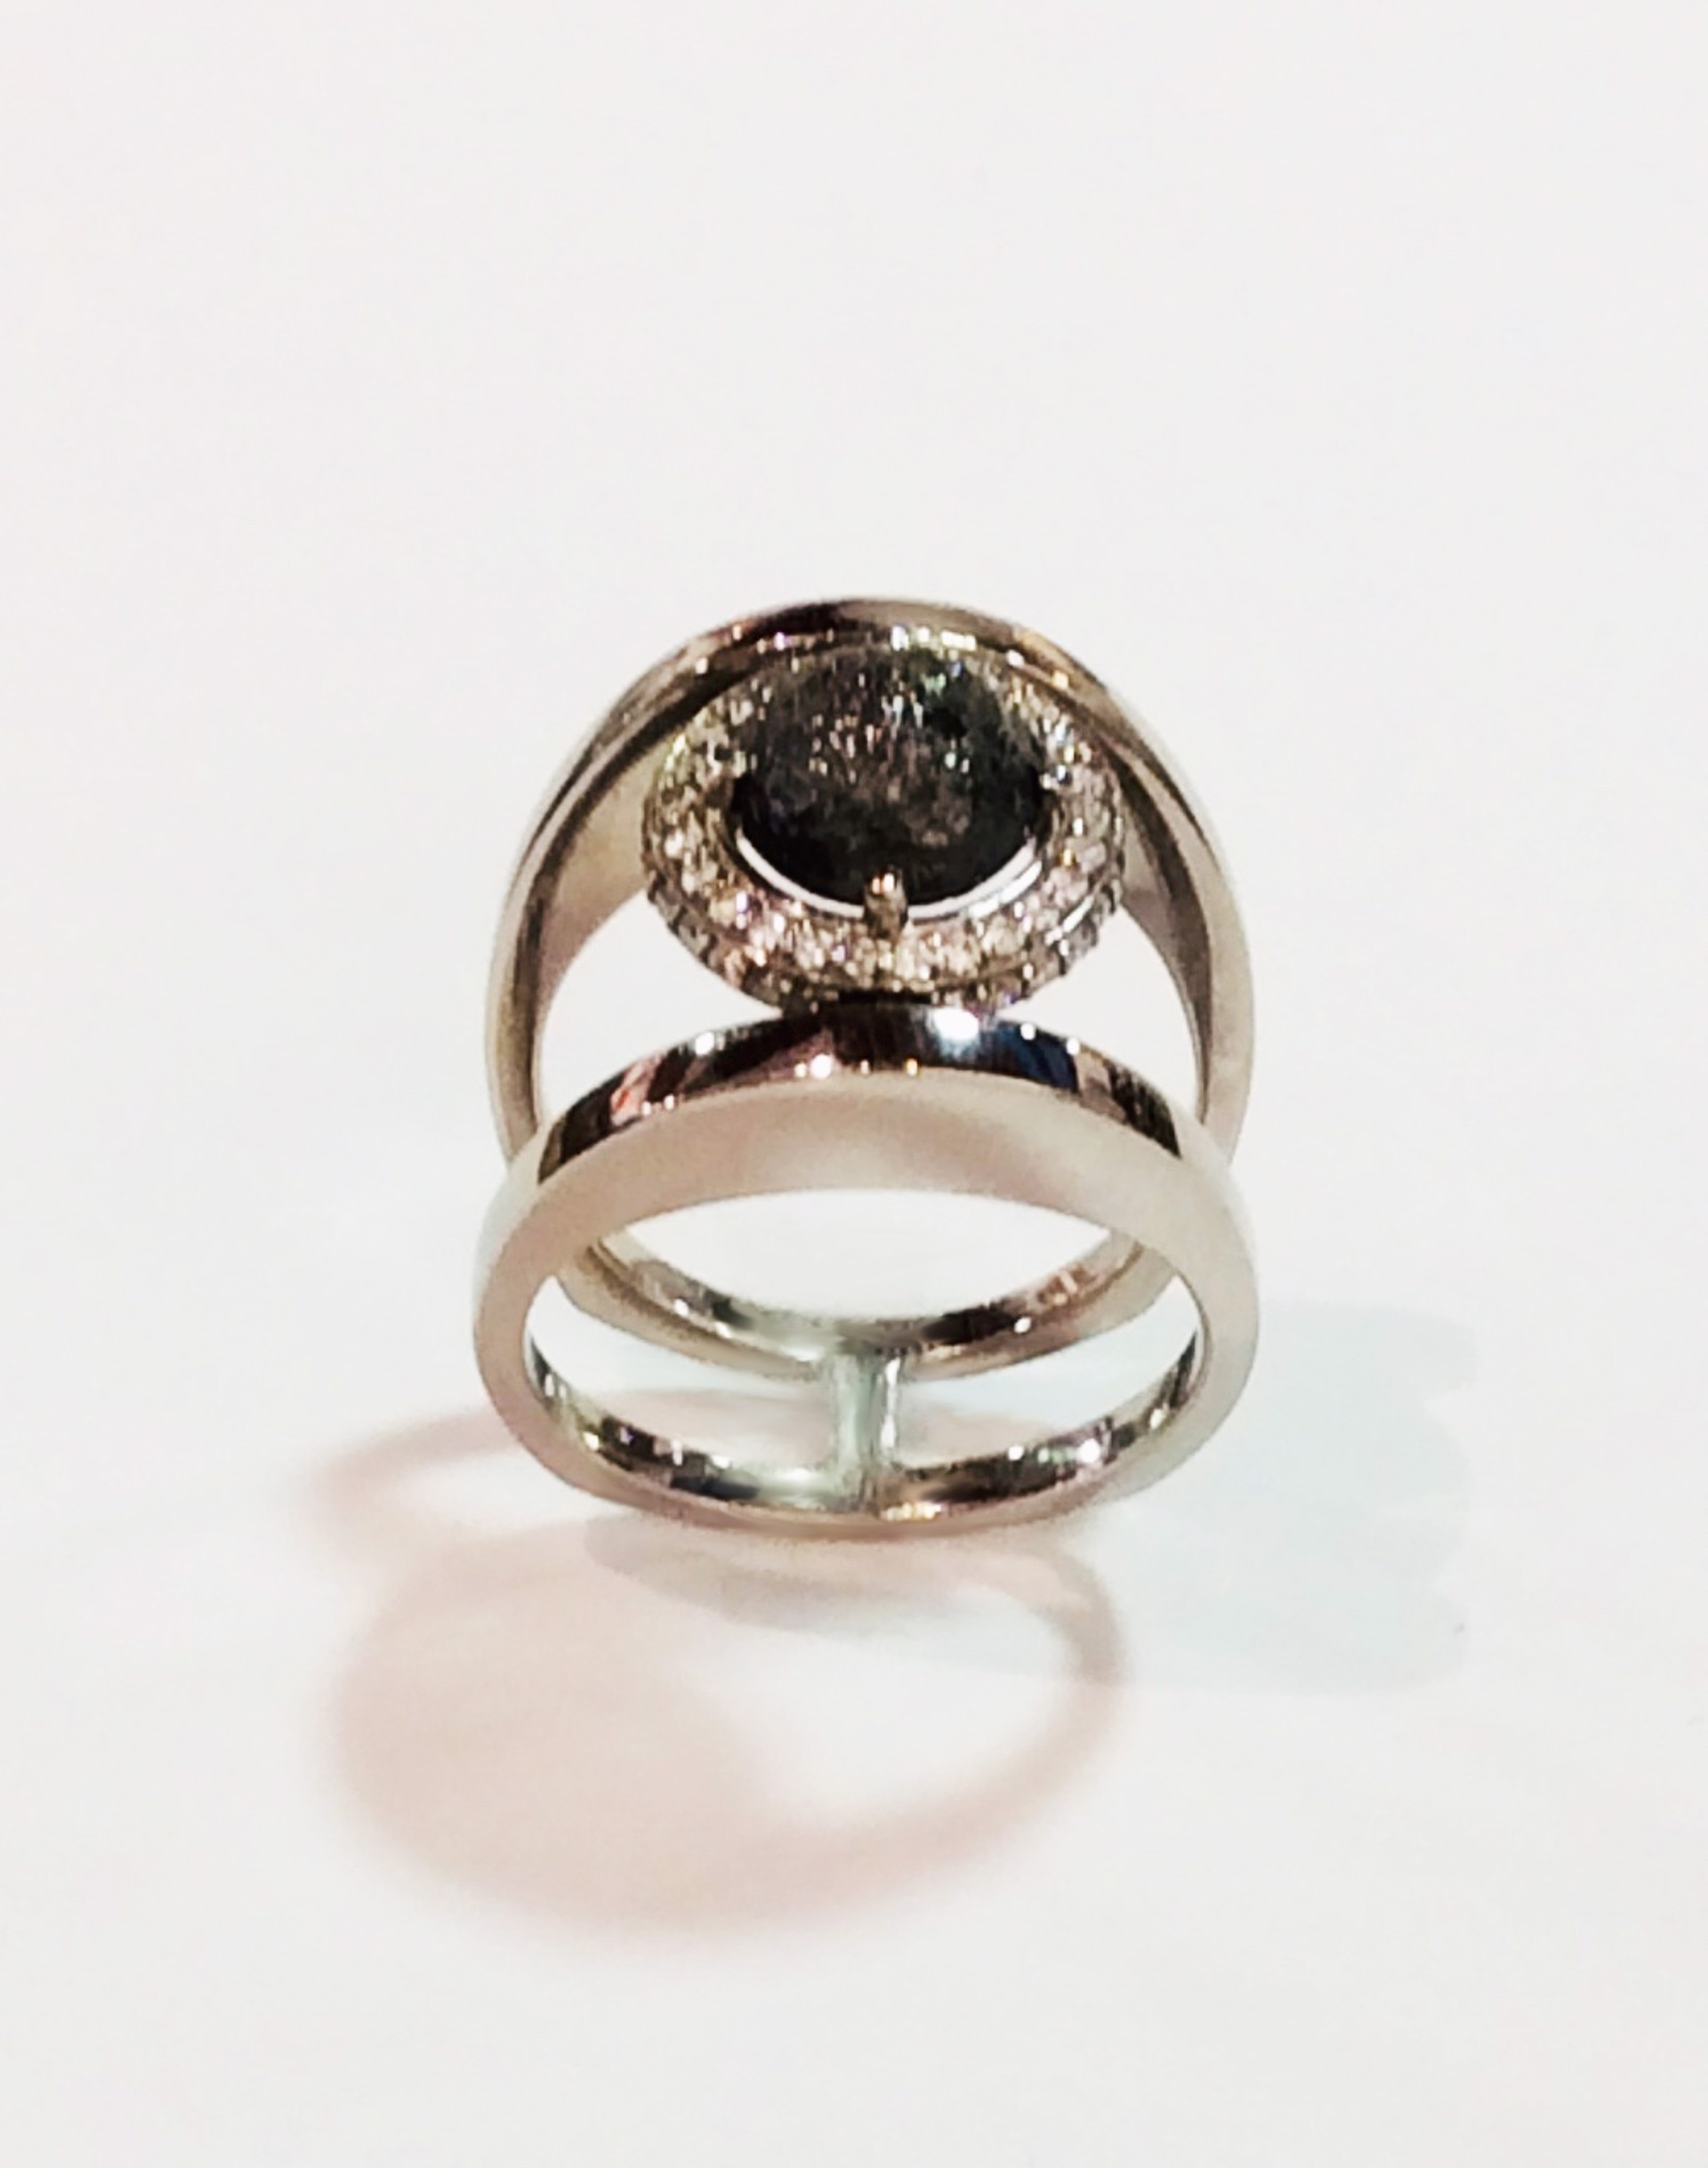 Black Ballas Diamond and Palladium Ring by D'ETTE DELFORGE